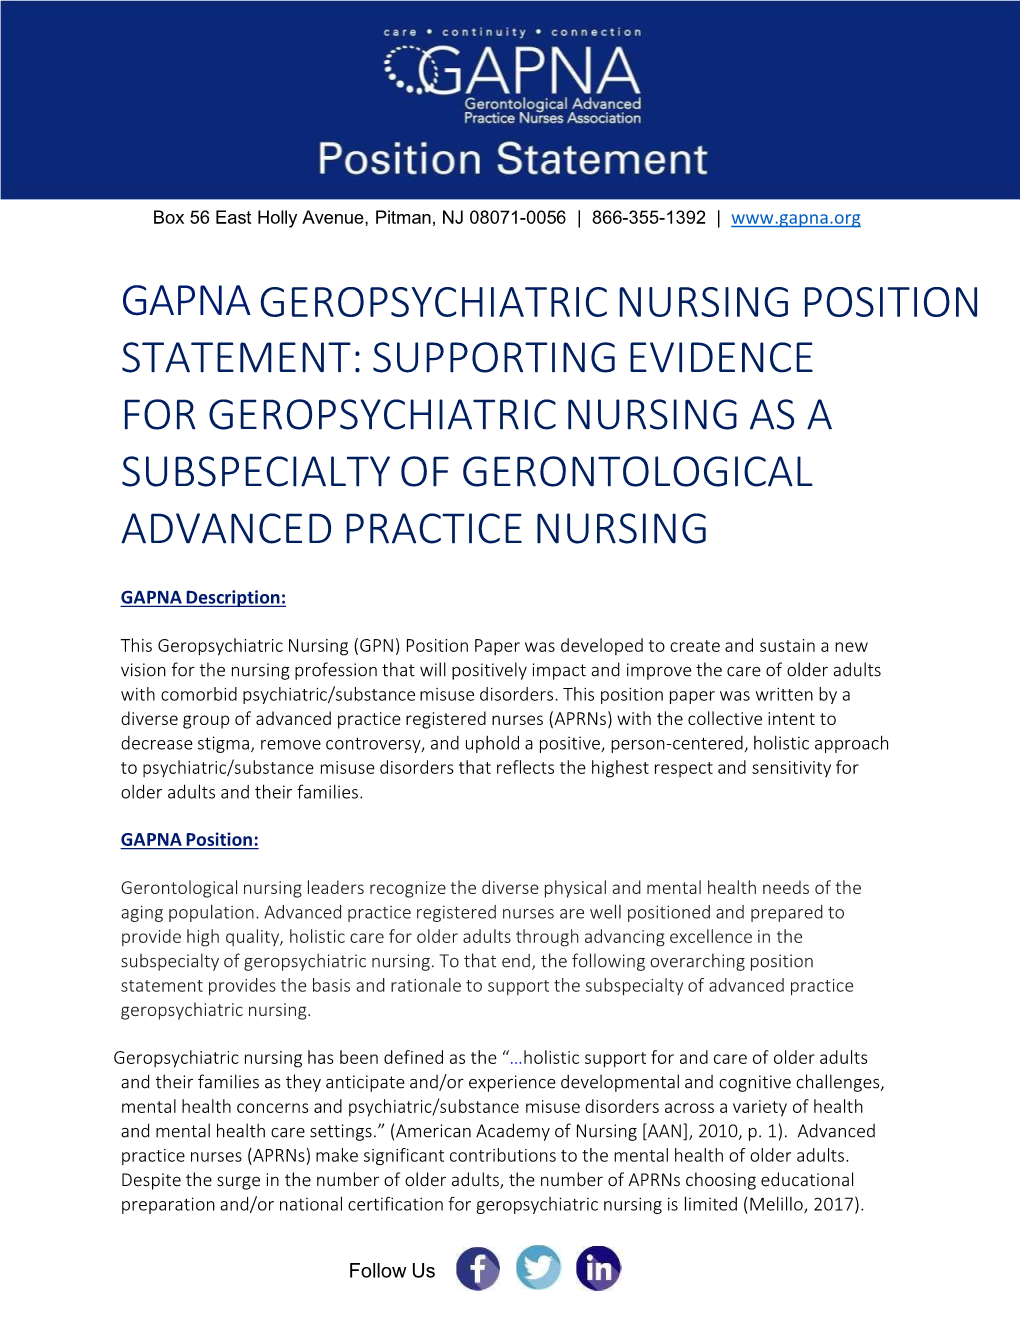 Gapna Geropsychiatric Nursing Position Statement: Supporting Evidence for Geropsychiatric Nursing As a Subspecialty of Gerontological Advanced Practice Nursing